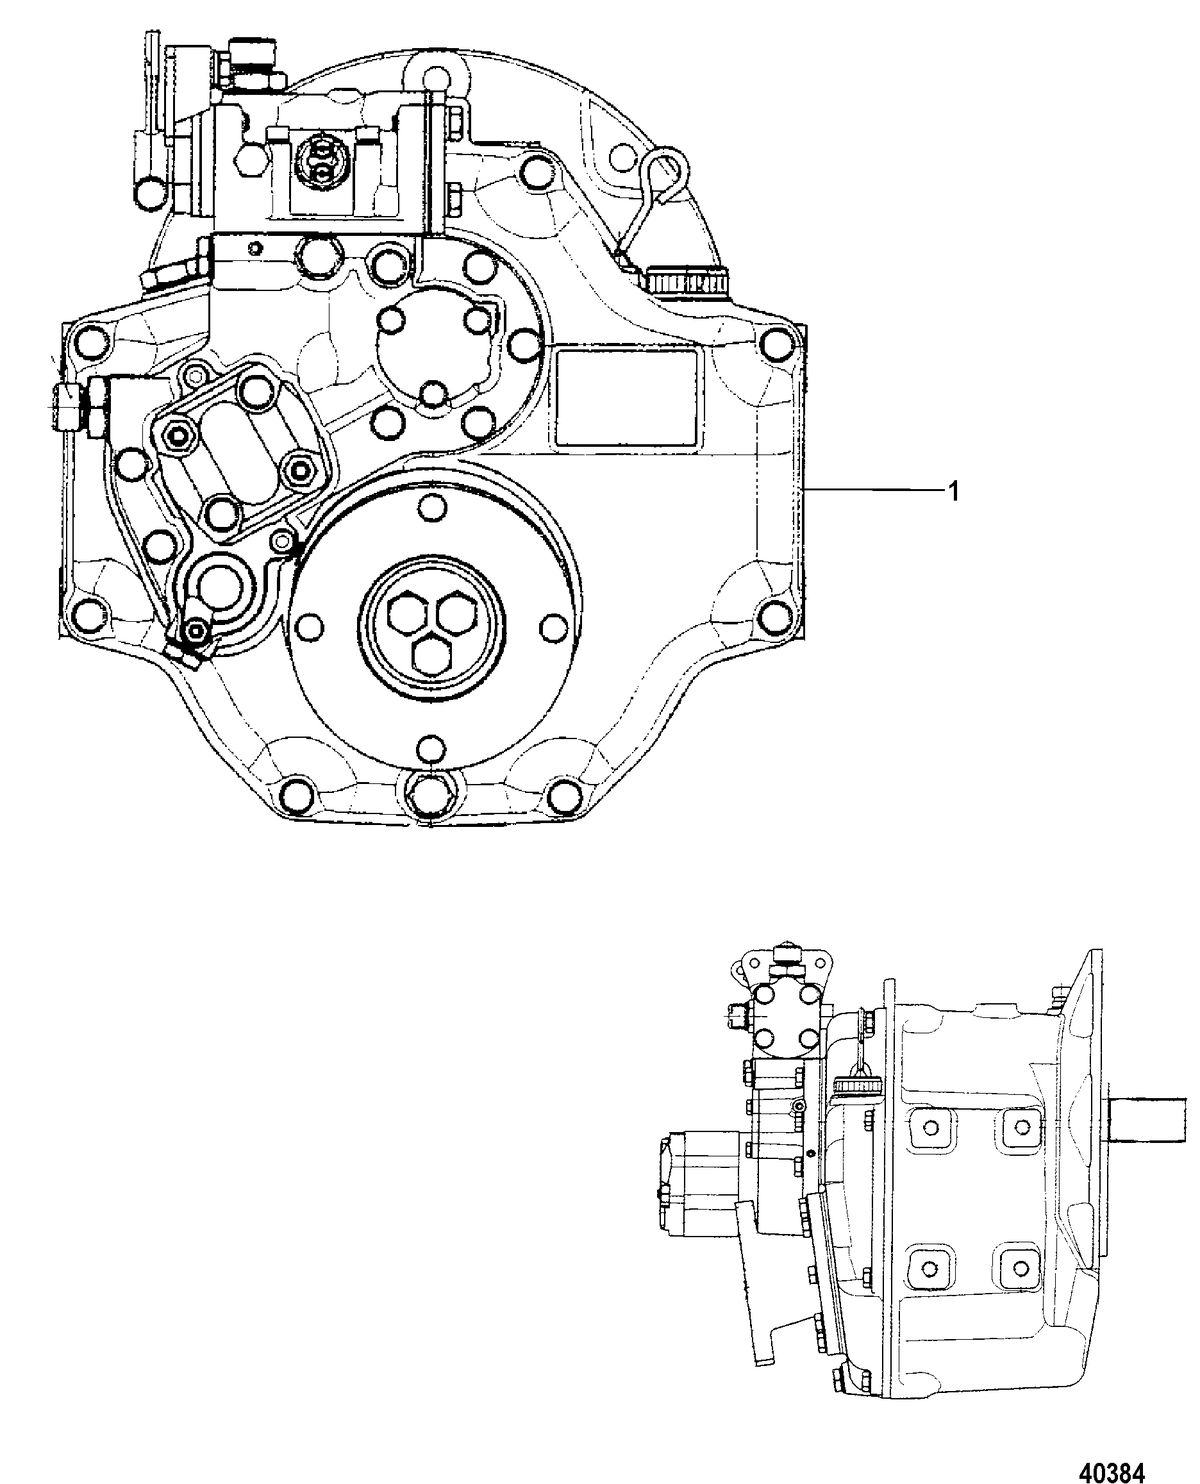 MERCRUISER CUMMINS/MERCRUISER DIESEL (QSD-2.0L) Transmission and Related Parts (Inboard), Technodrive 485